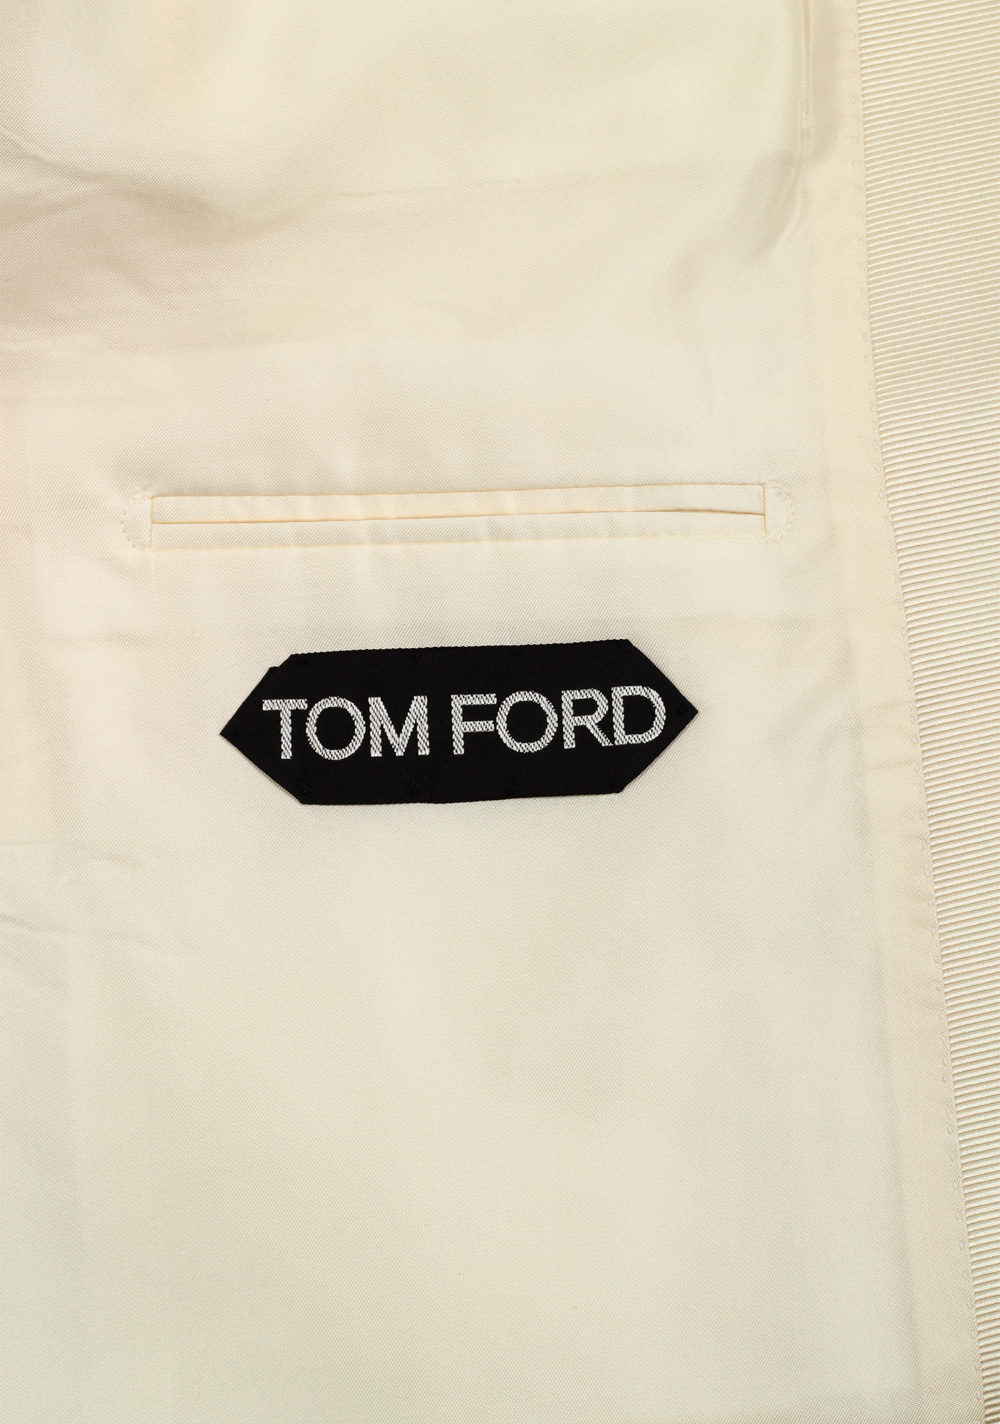 TOM FORD Windsor James Bond Spectre Tuxedo Dinner Jacket Size 58 / 48R U.S. | Costume Limité